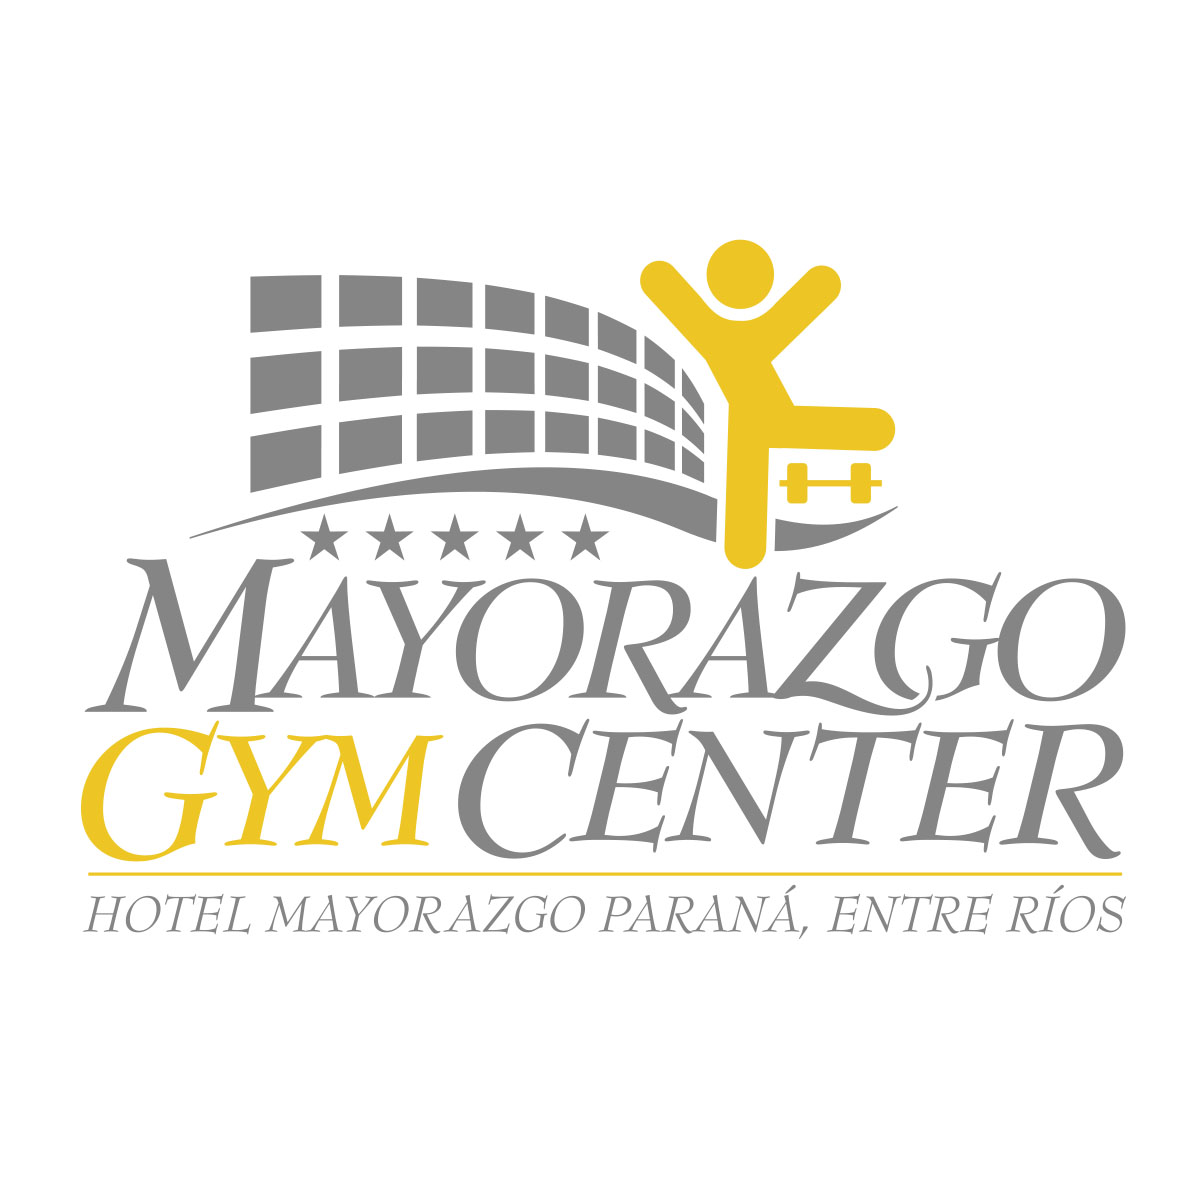 2003 gym center mayorazgo